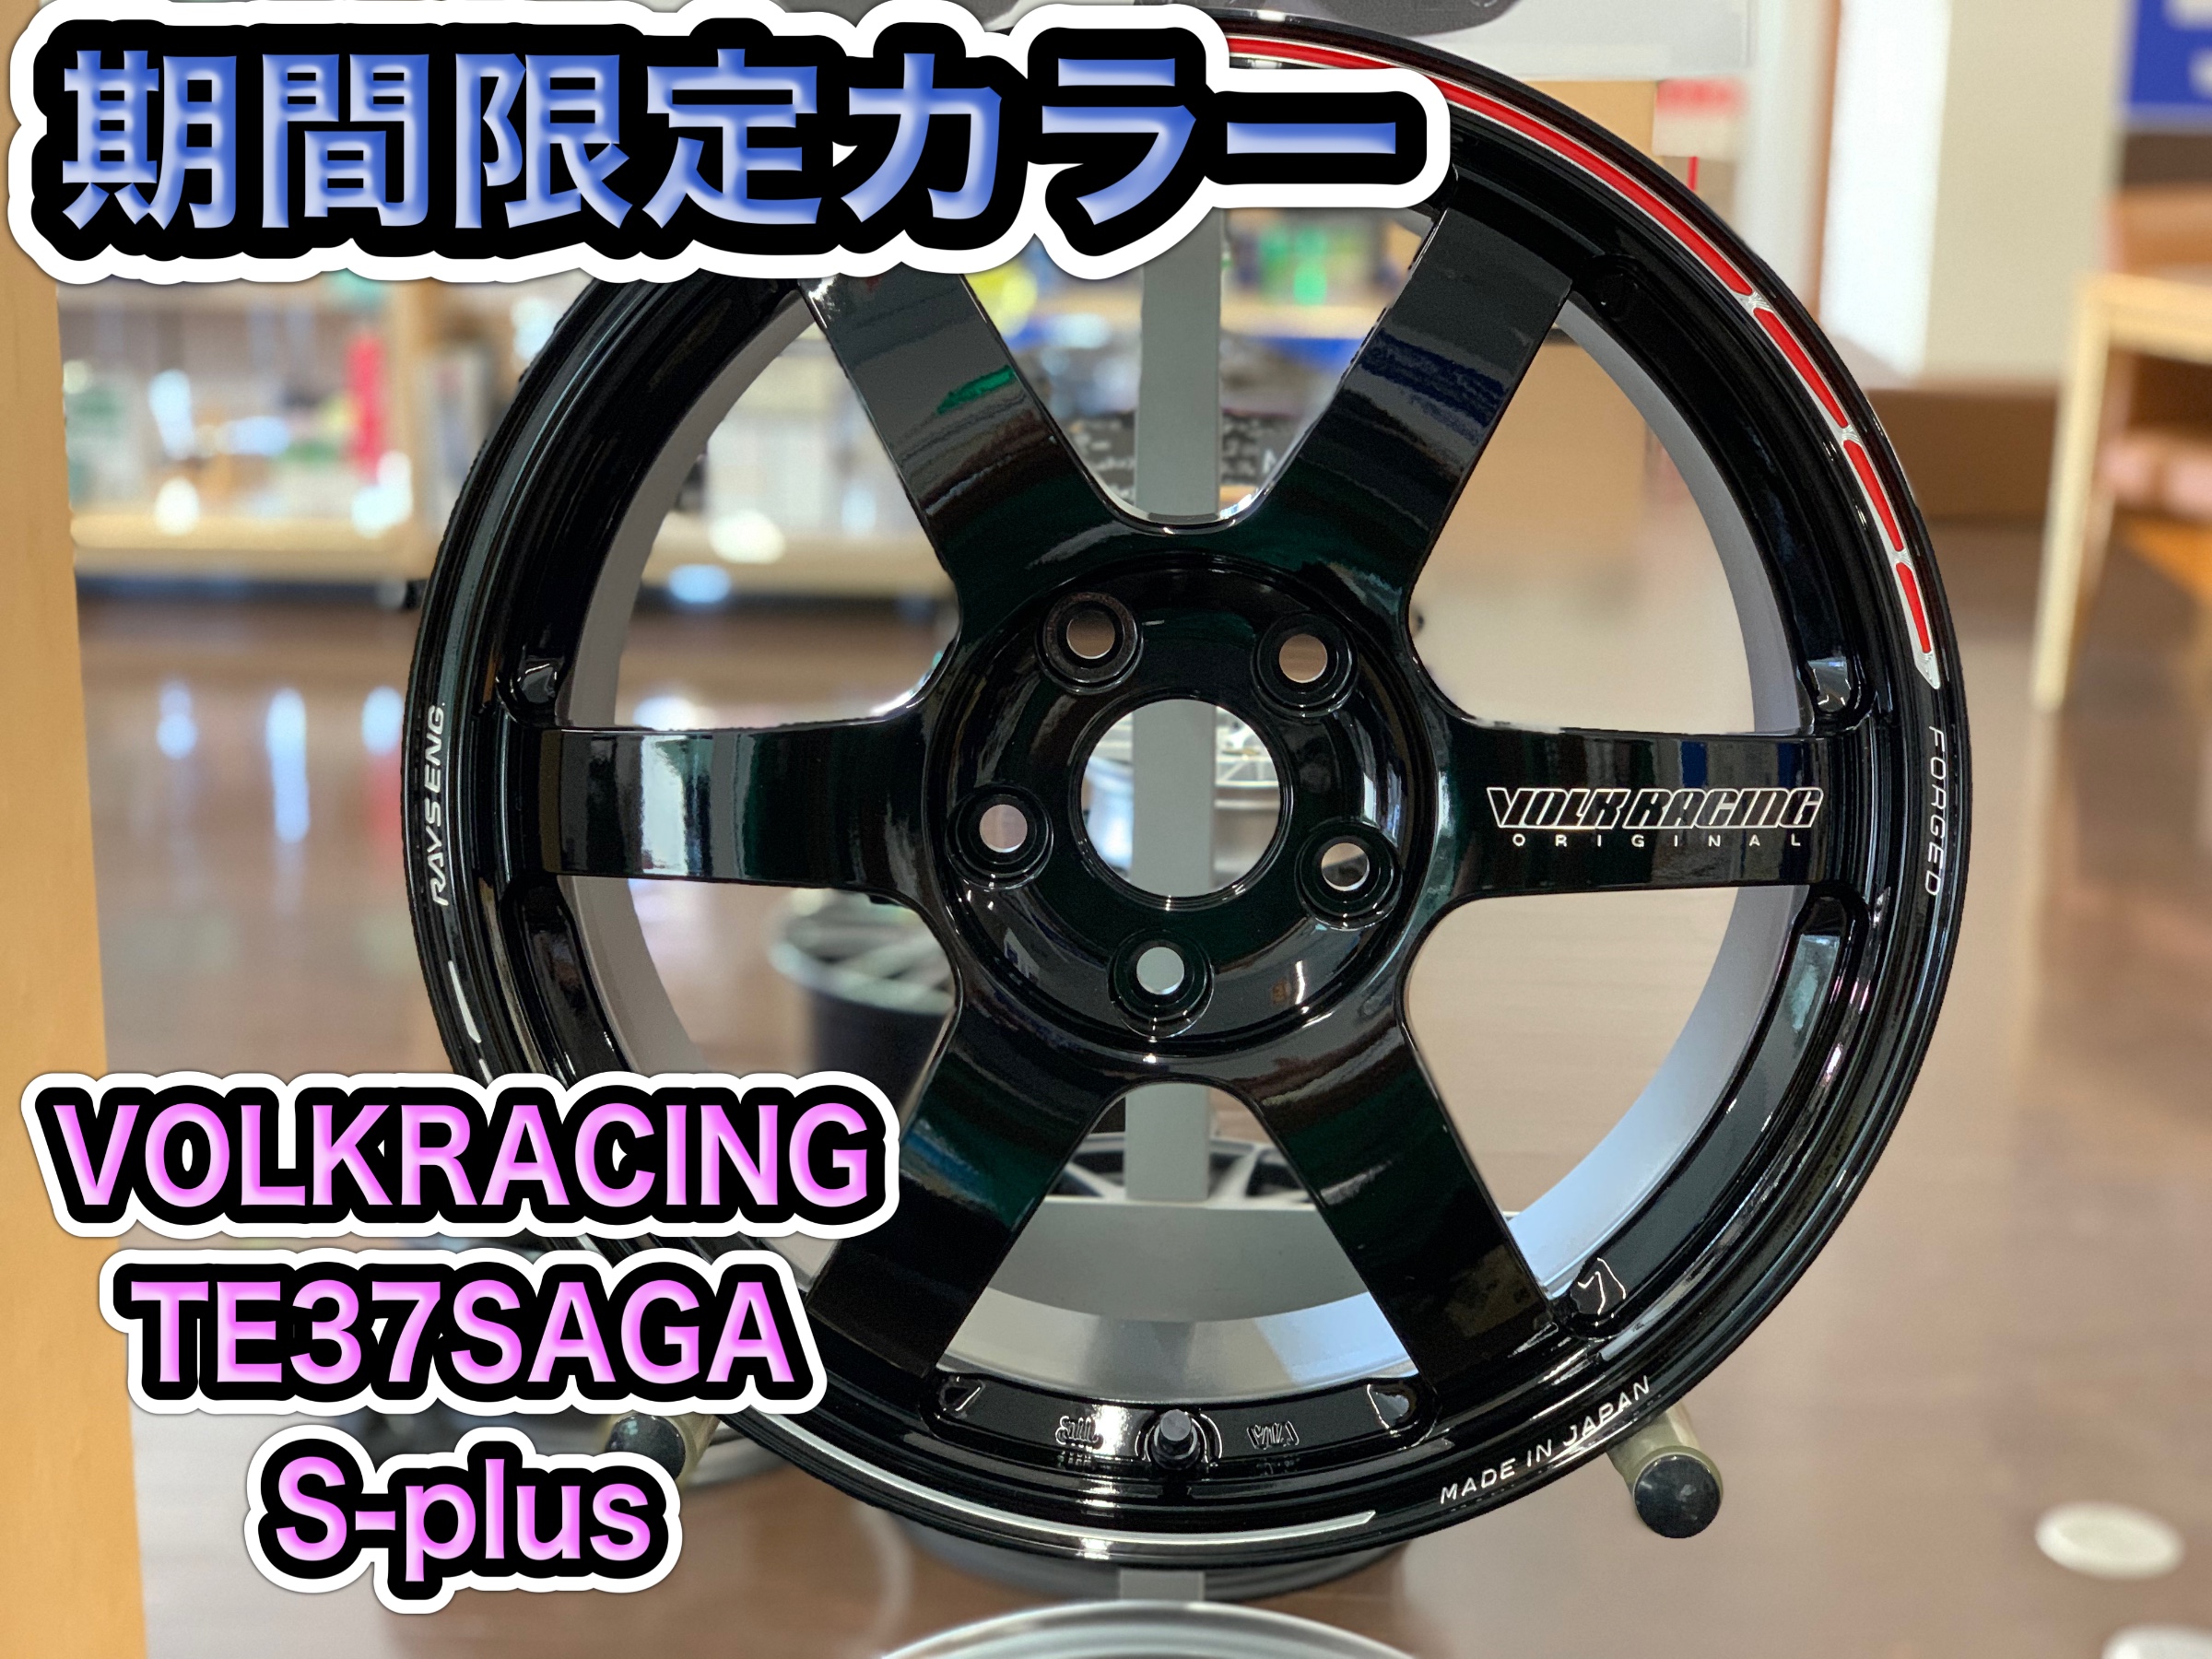 RAYS (レイズ) ボルクレーシング TE37SAGA S-plus 新商品 期間限定 ...